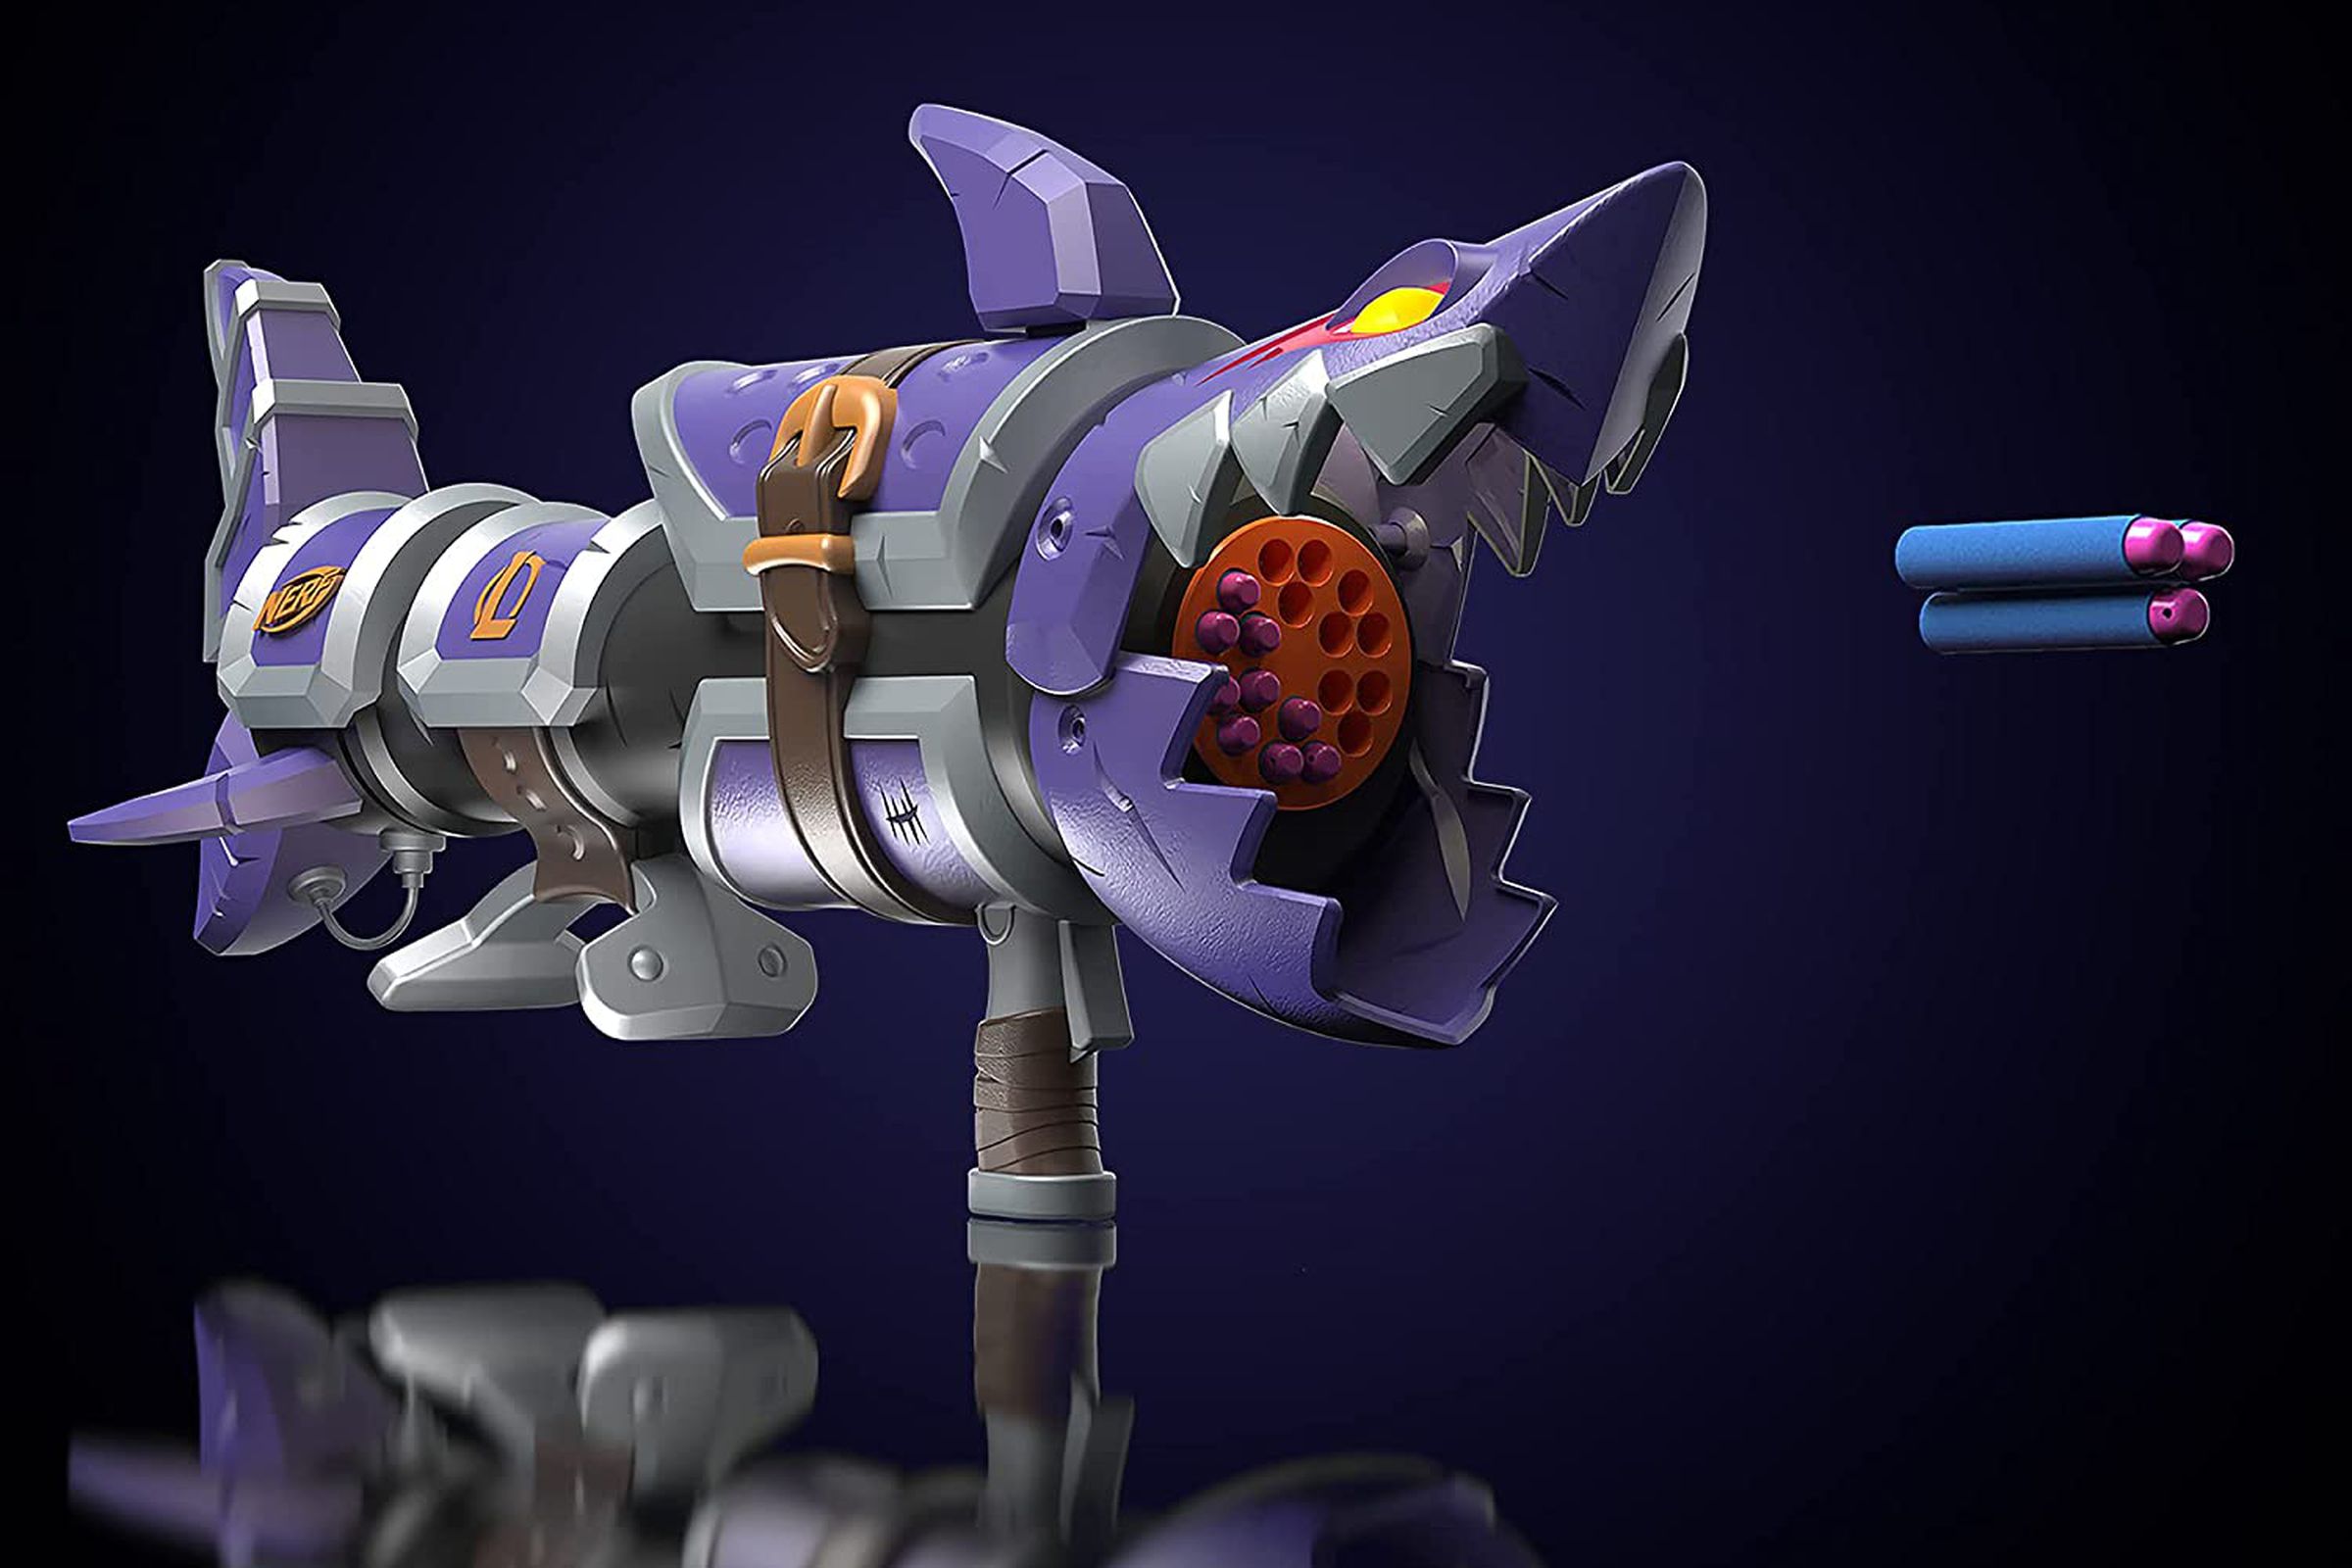 Purple metal shark armor around a rocket launcher, is what it looks like